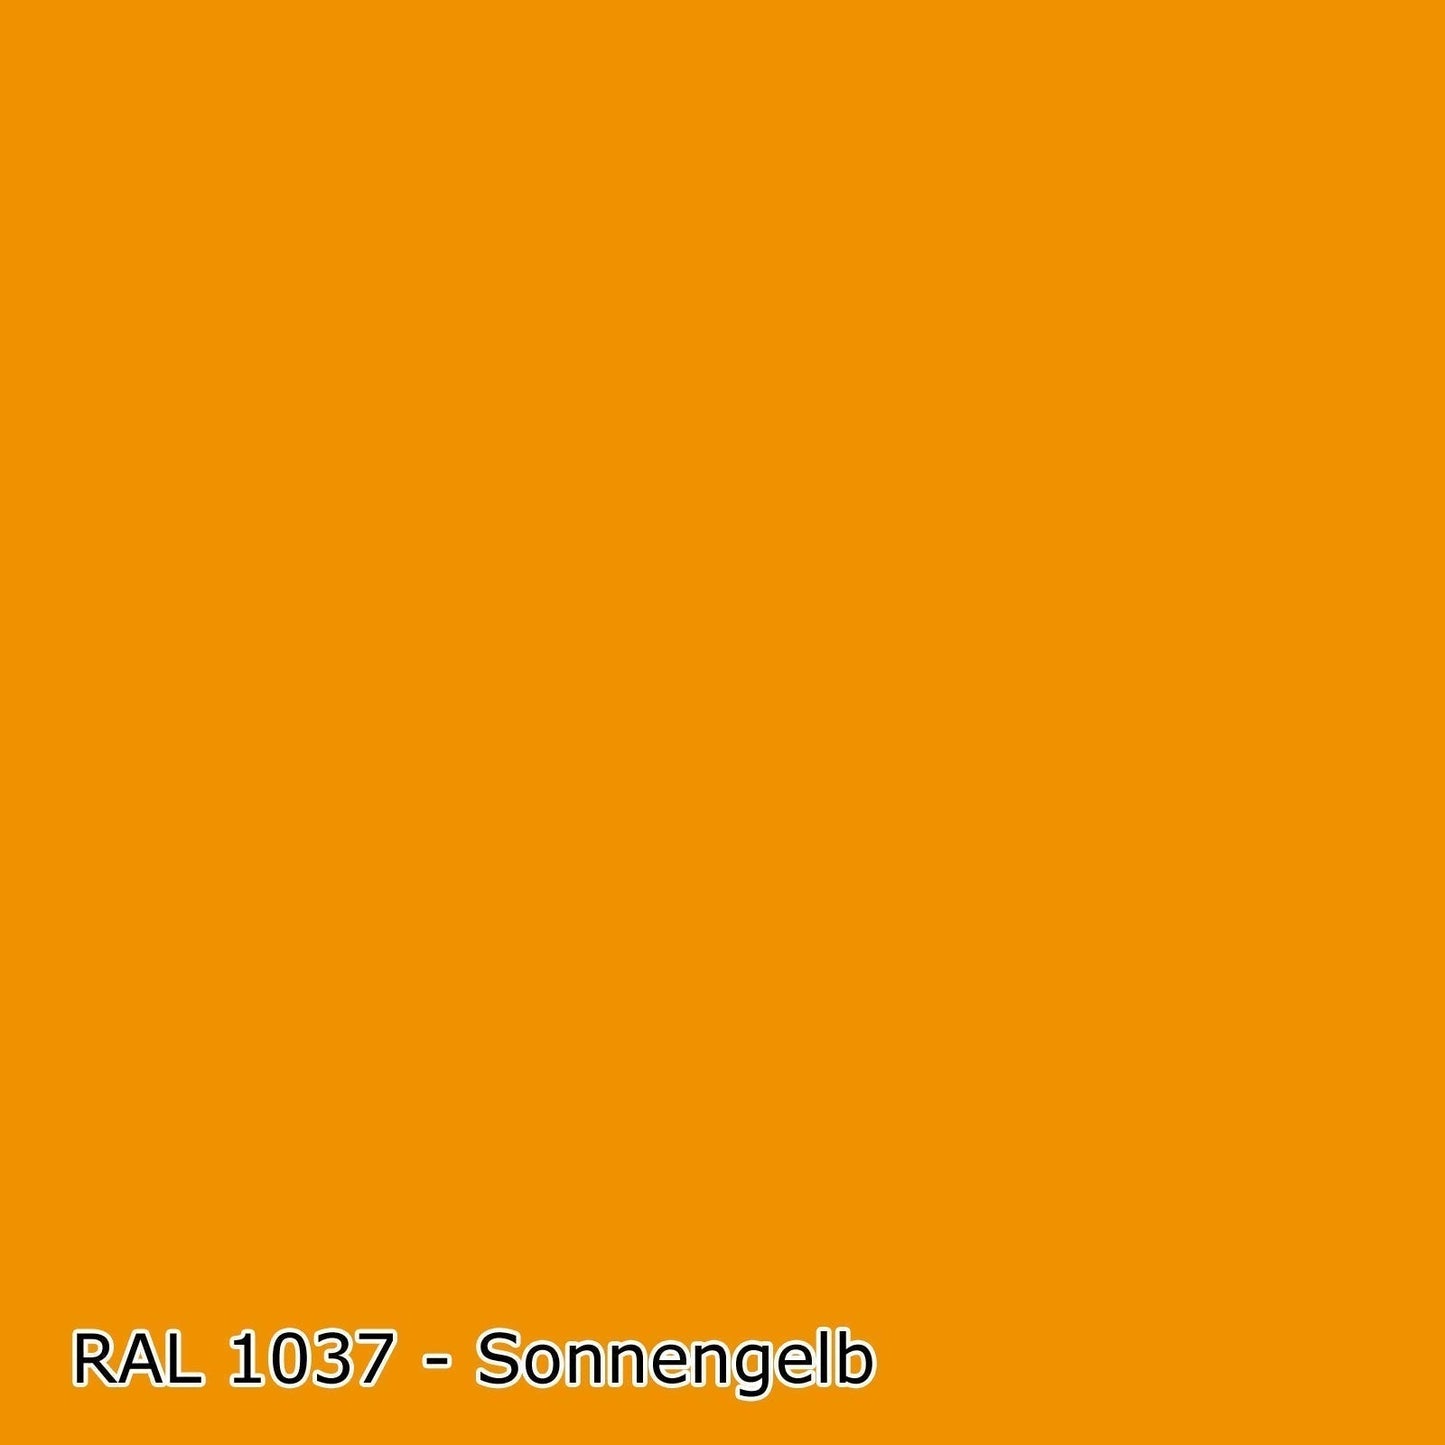 1 L Acryl Buntlack, Acryllack, RAL Farbwahl - SEIDENMATT (RAL 1000 - 6007)